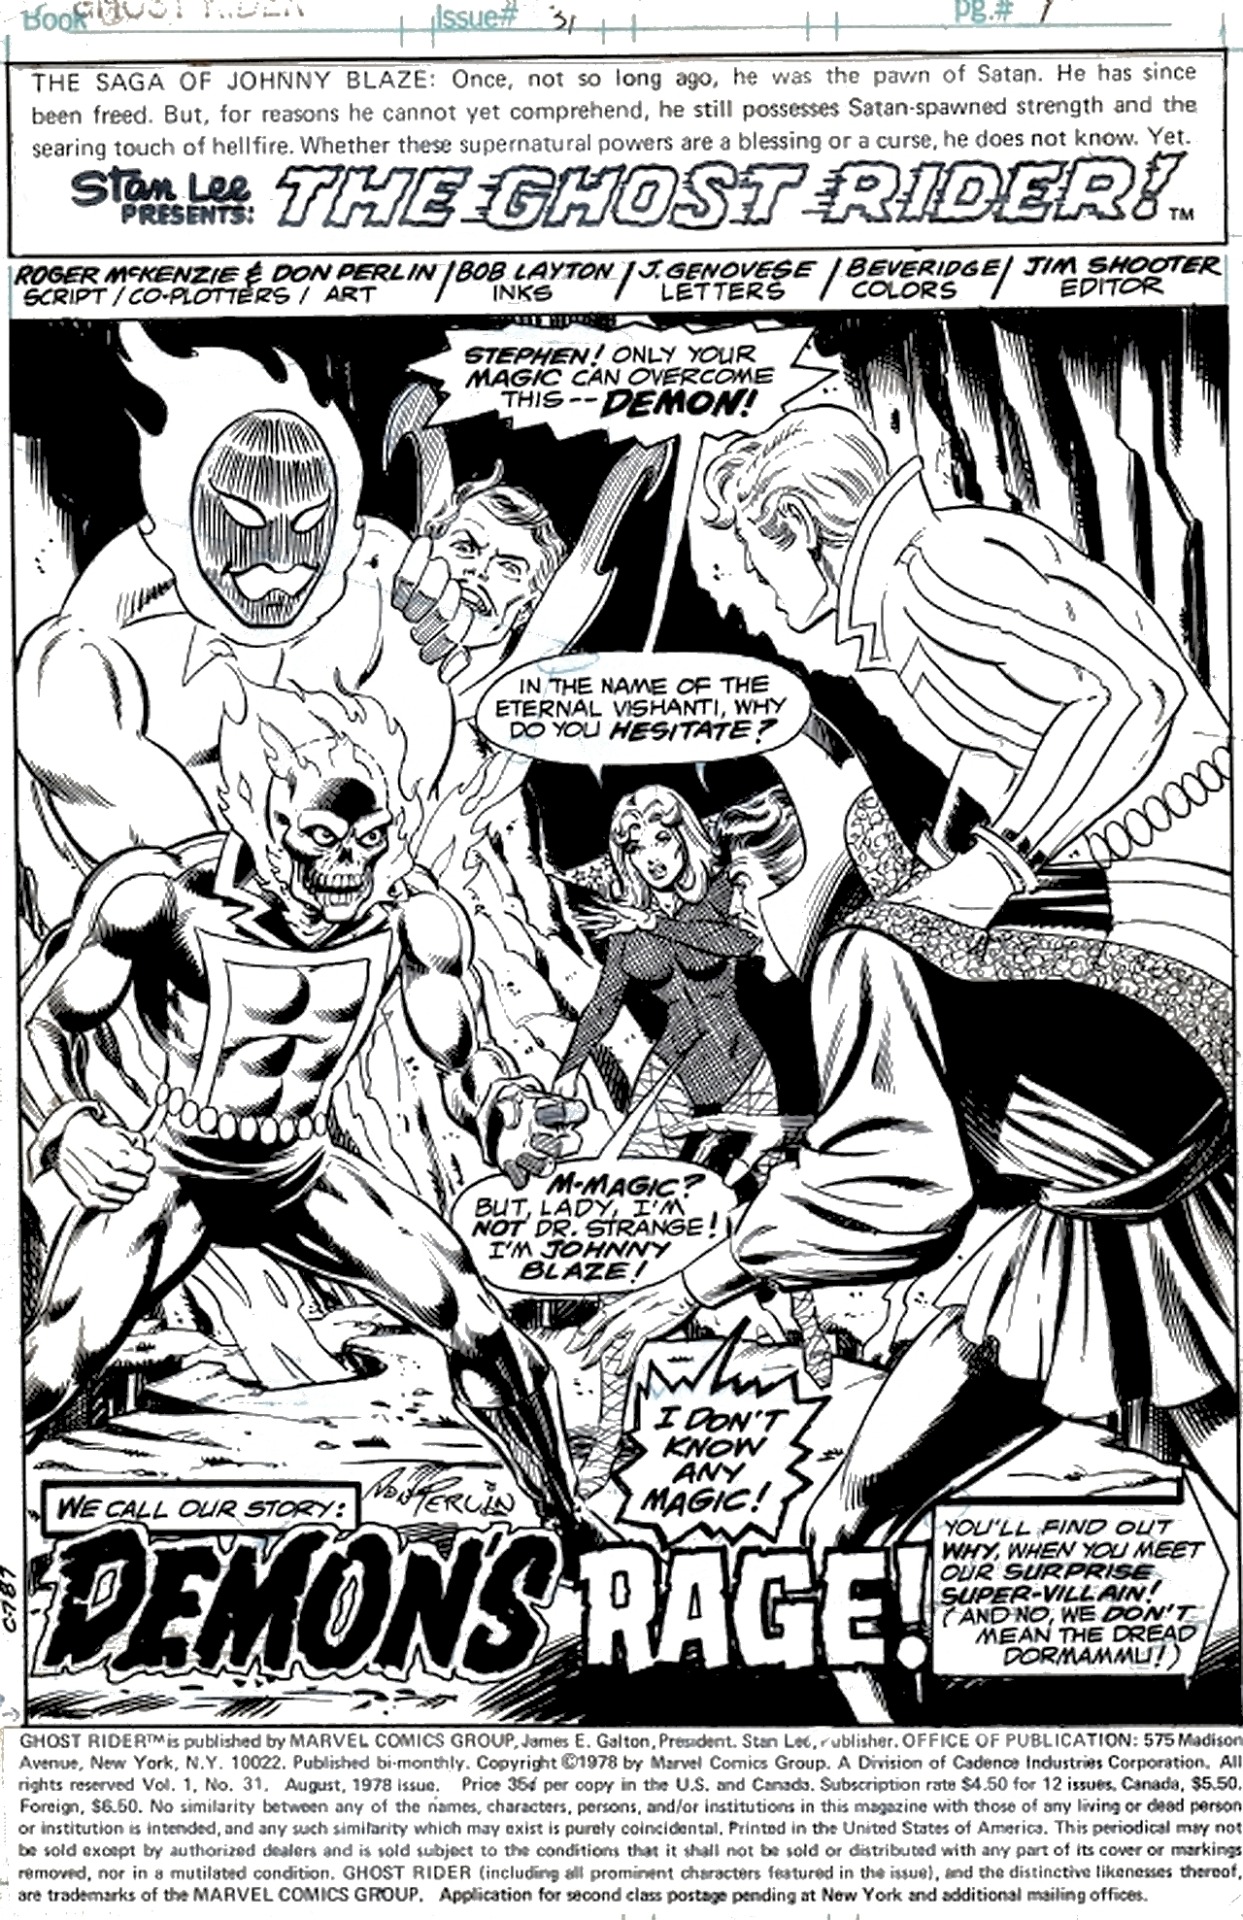 Ghost Rider 31 pg1 by Don Perlin #bronze age comic books  #title splash page  #original comic art #splash page#ghost rider #dr. strange #doctor strange#comic art#don perlin